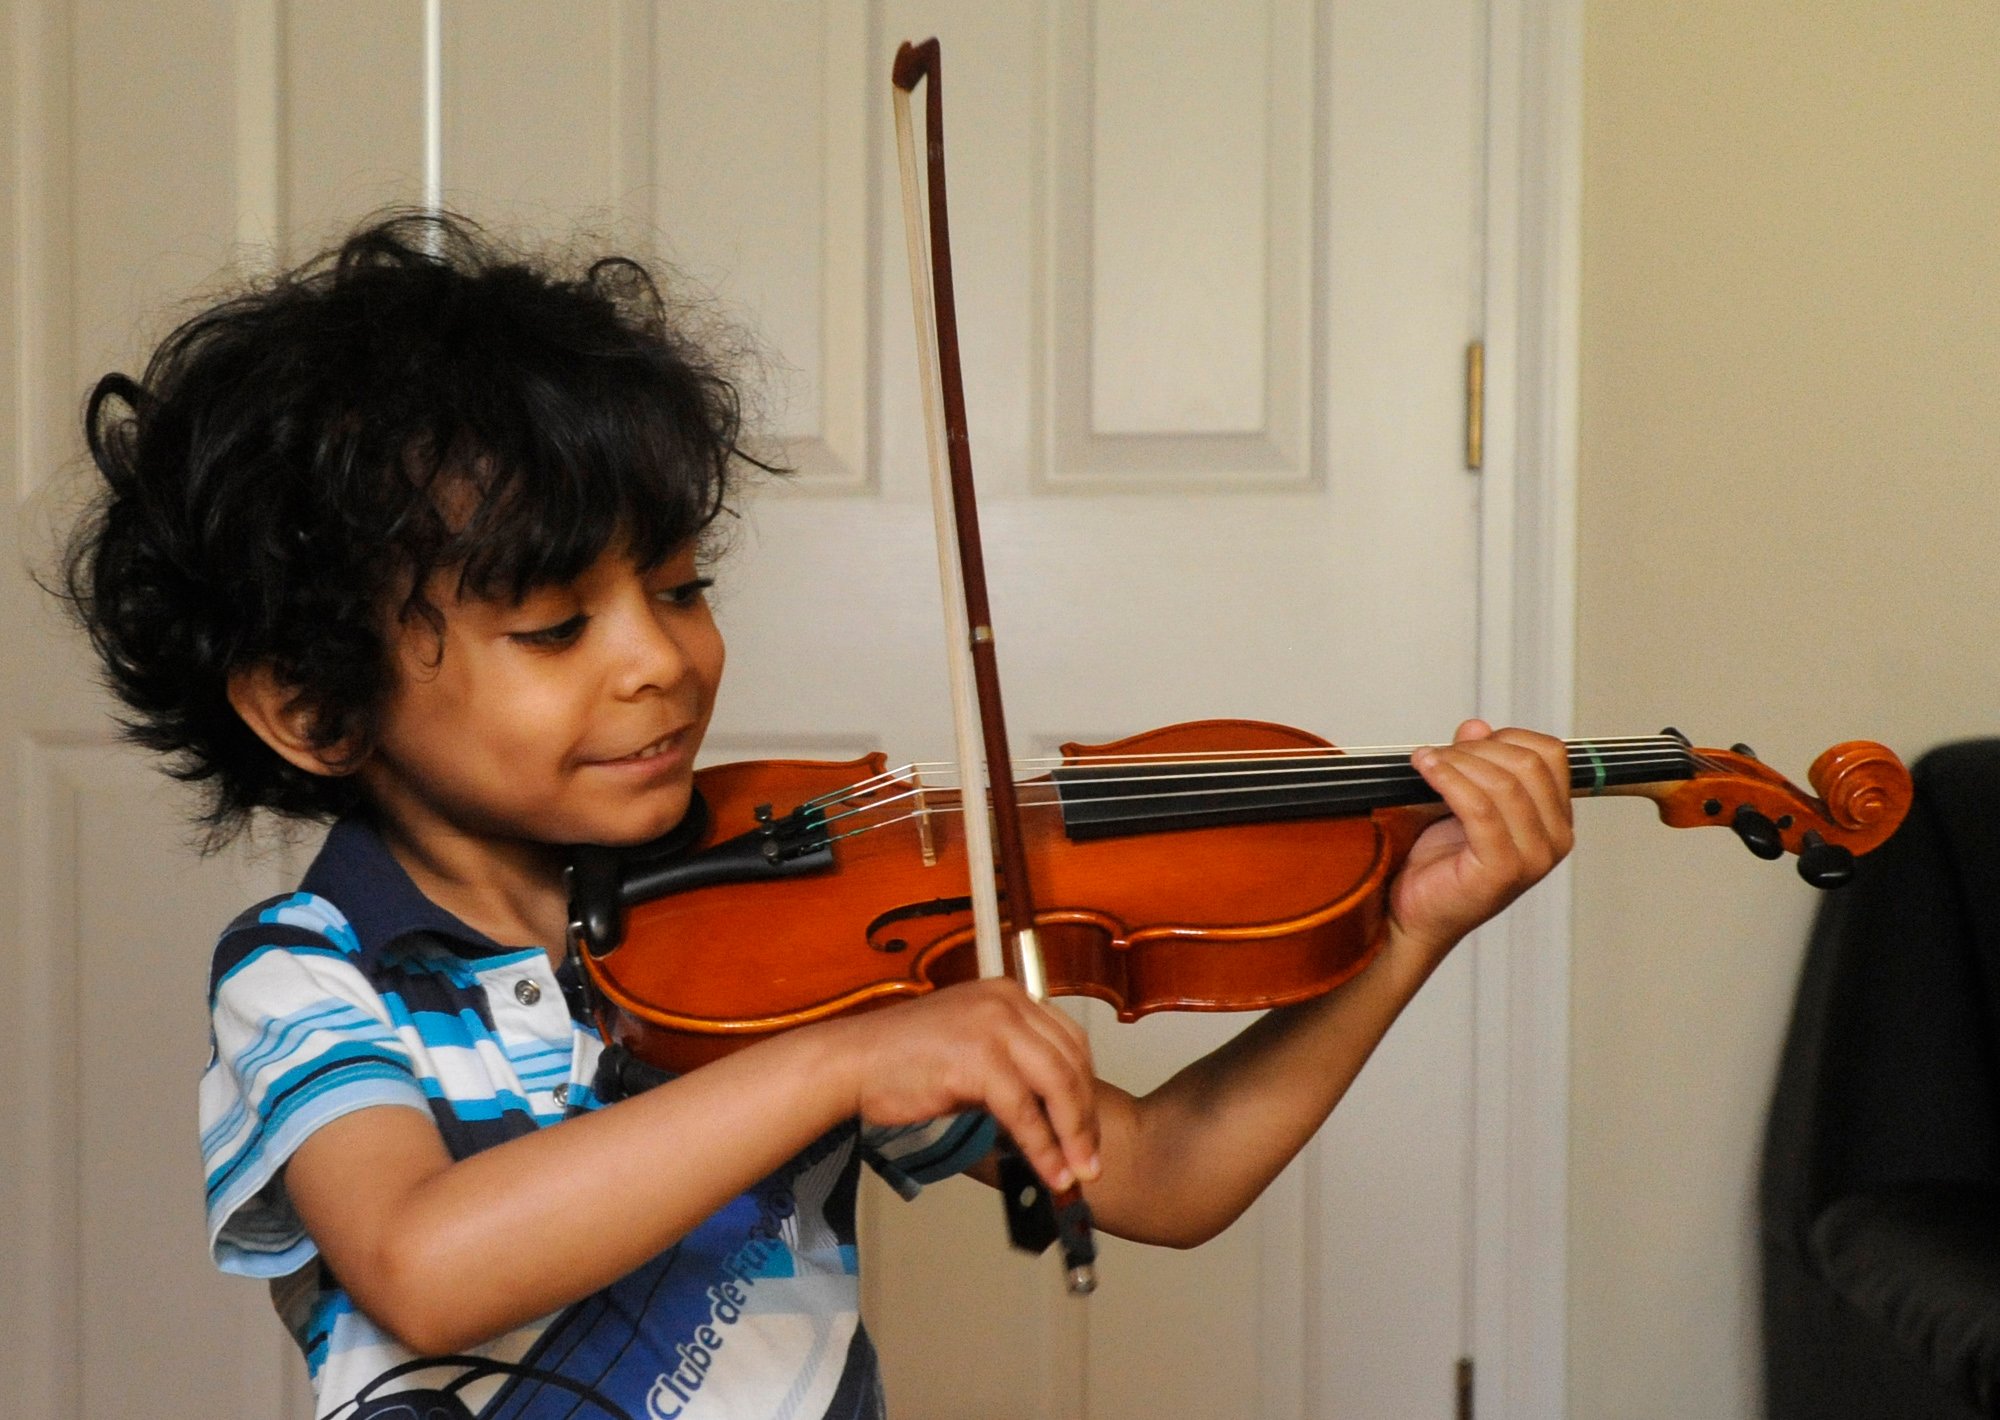 Child prodigy Caesar Sant practices violin